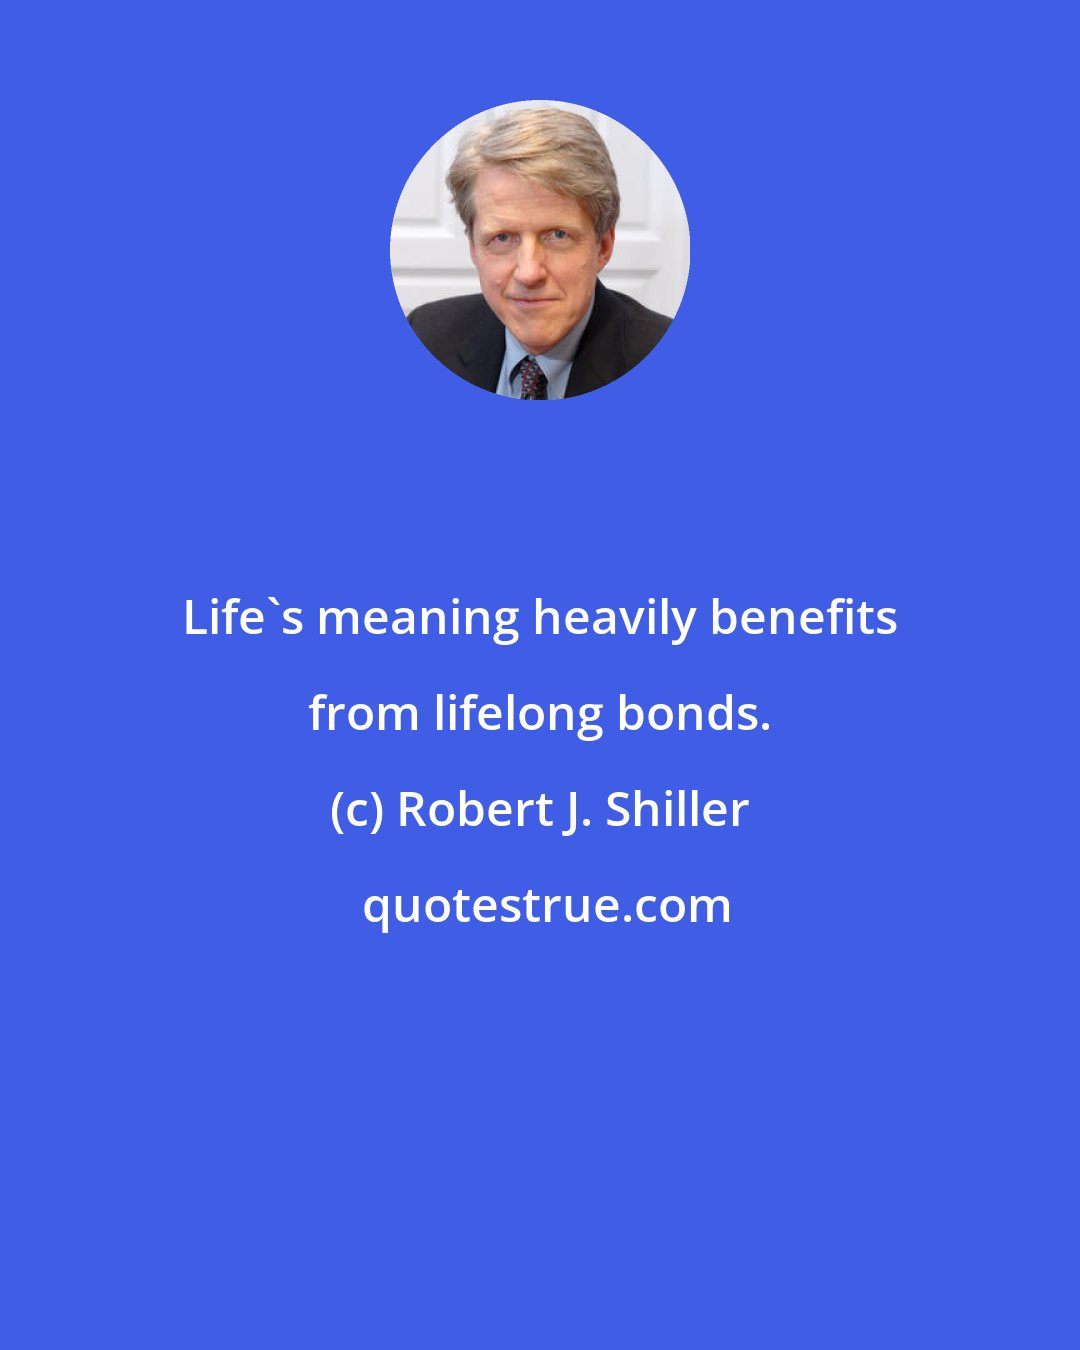 Robert J. Shiller: Life's meaning heavily benefits from lifelong bonds.